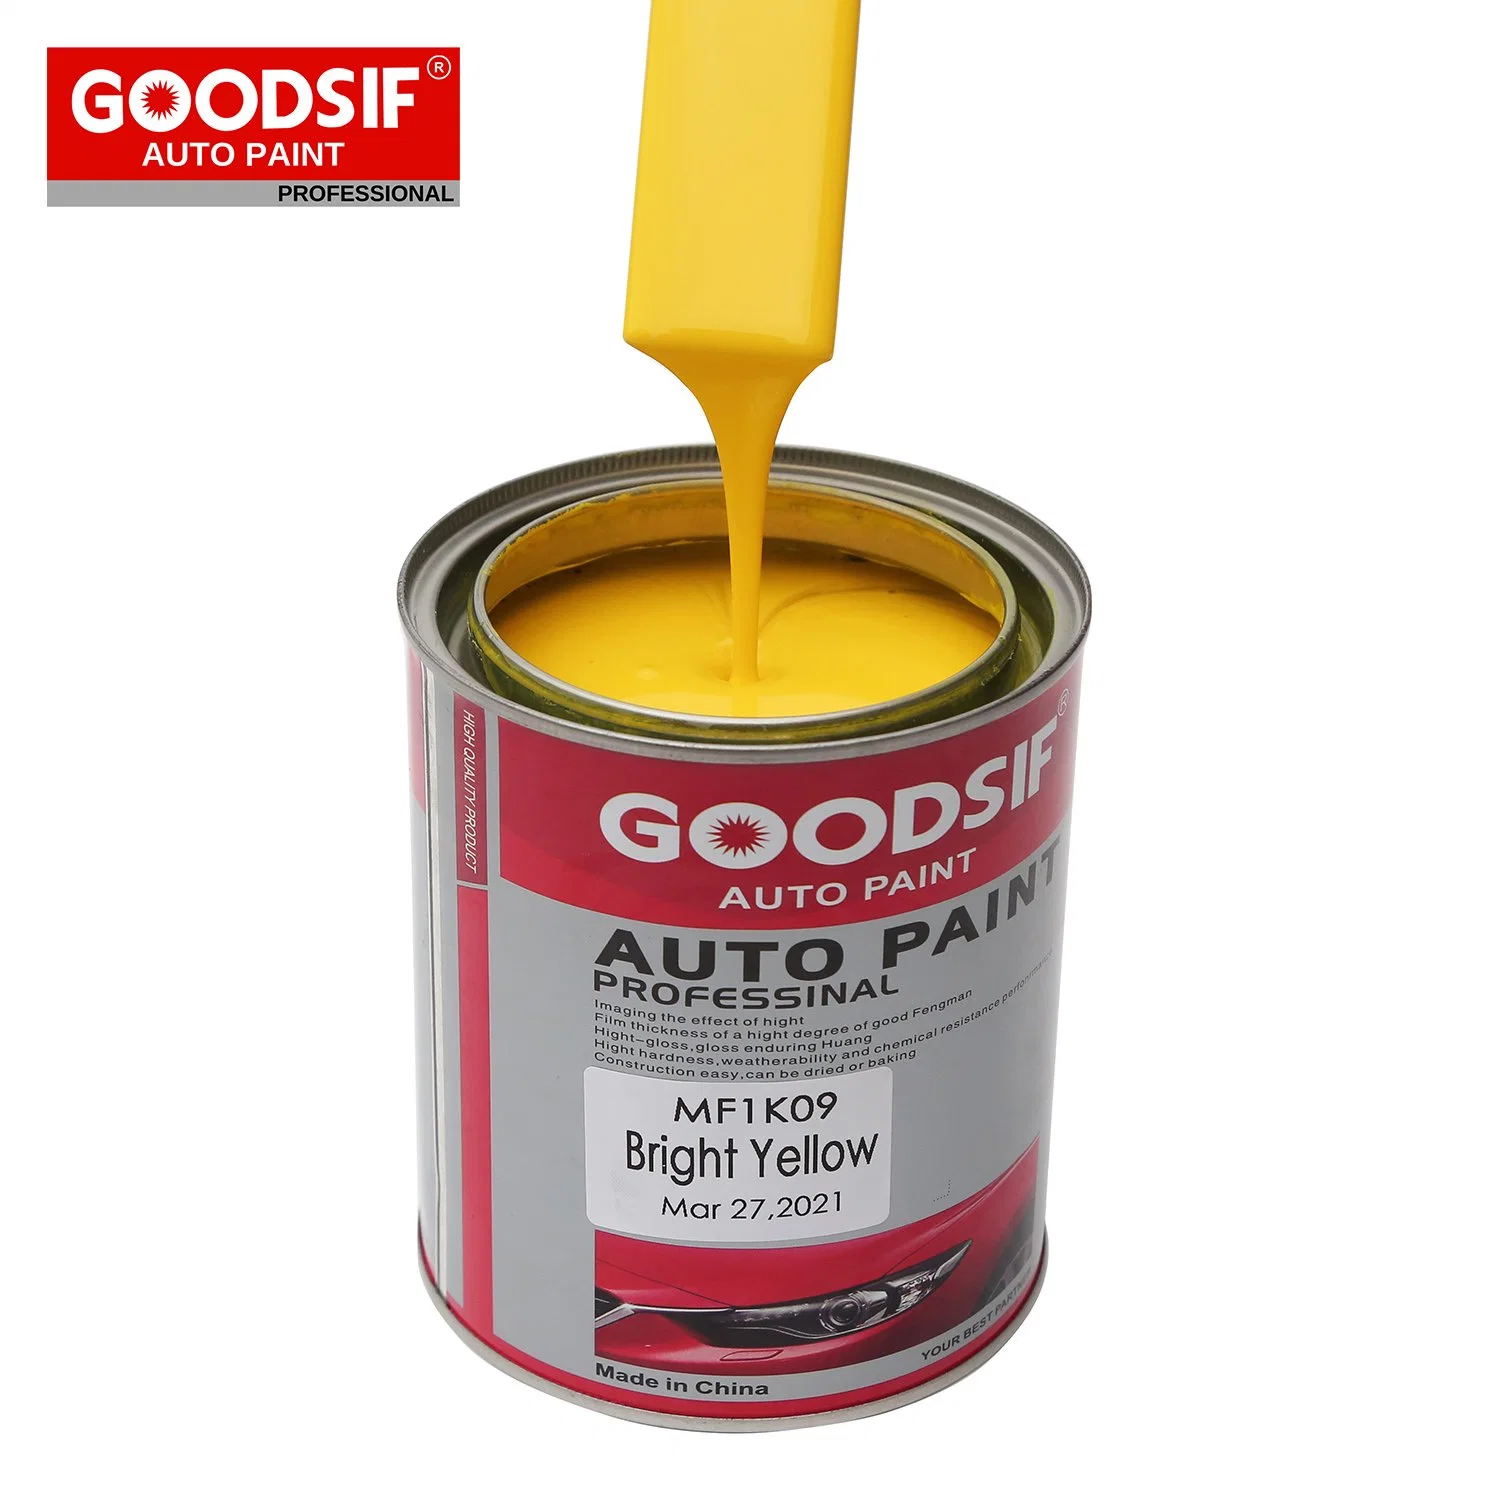 Auto Body Shop High Adhesion Power Goodsif Spray Acrylic Paint Car Refinish Automotive Paint